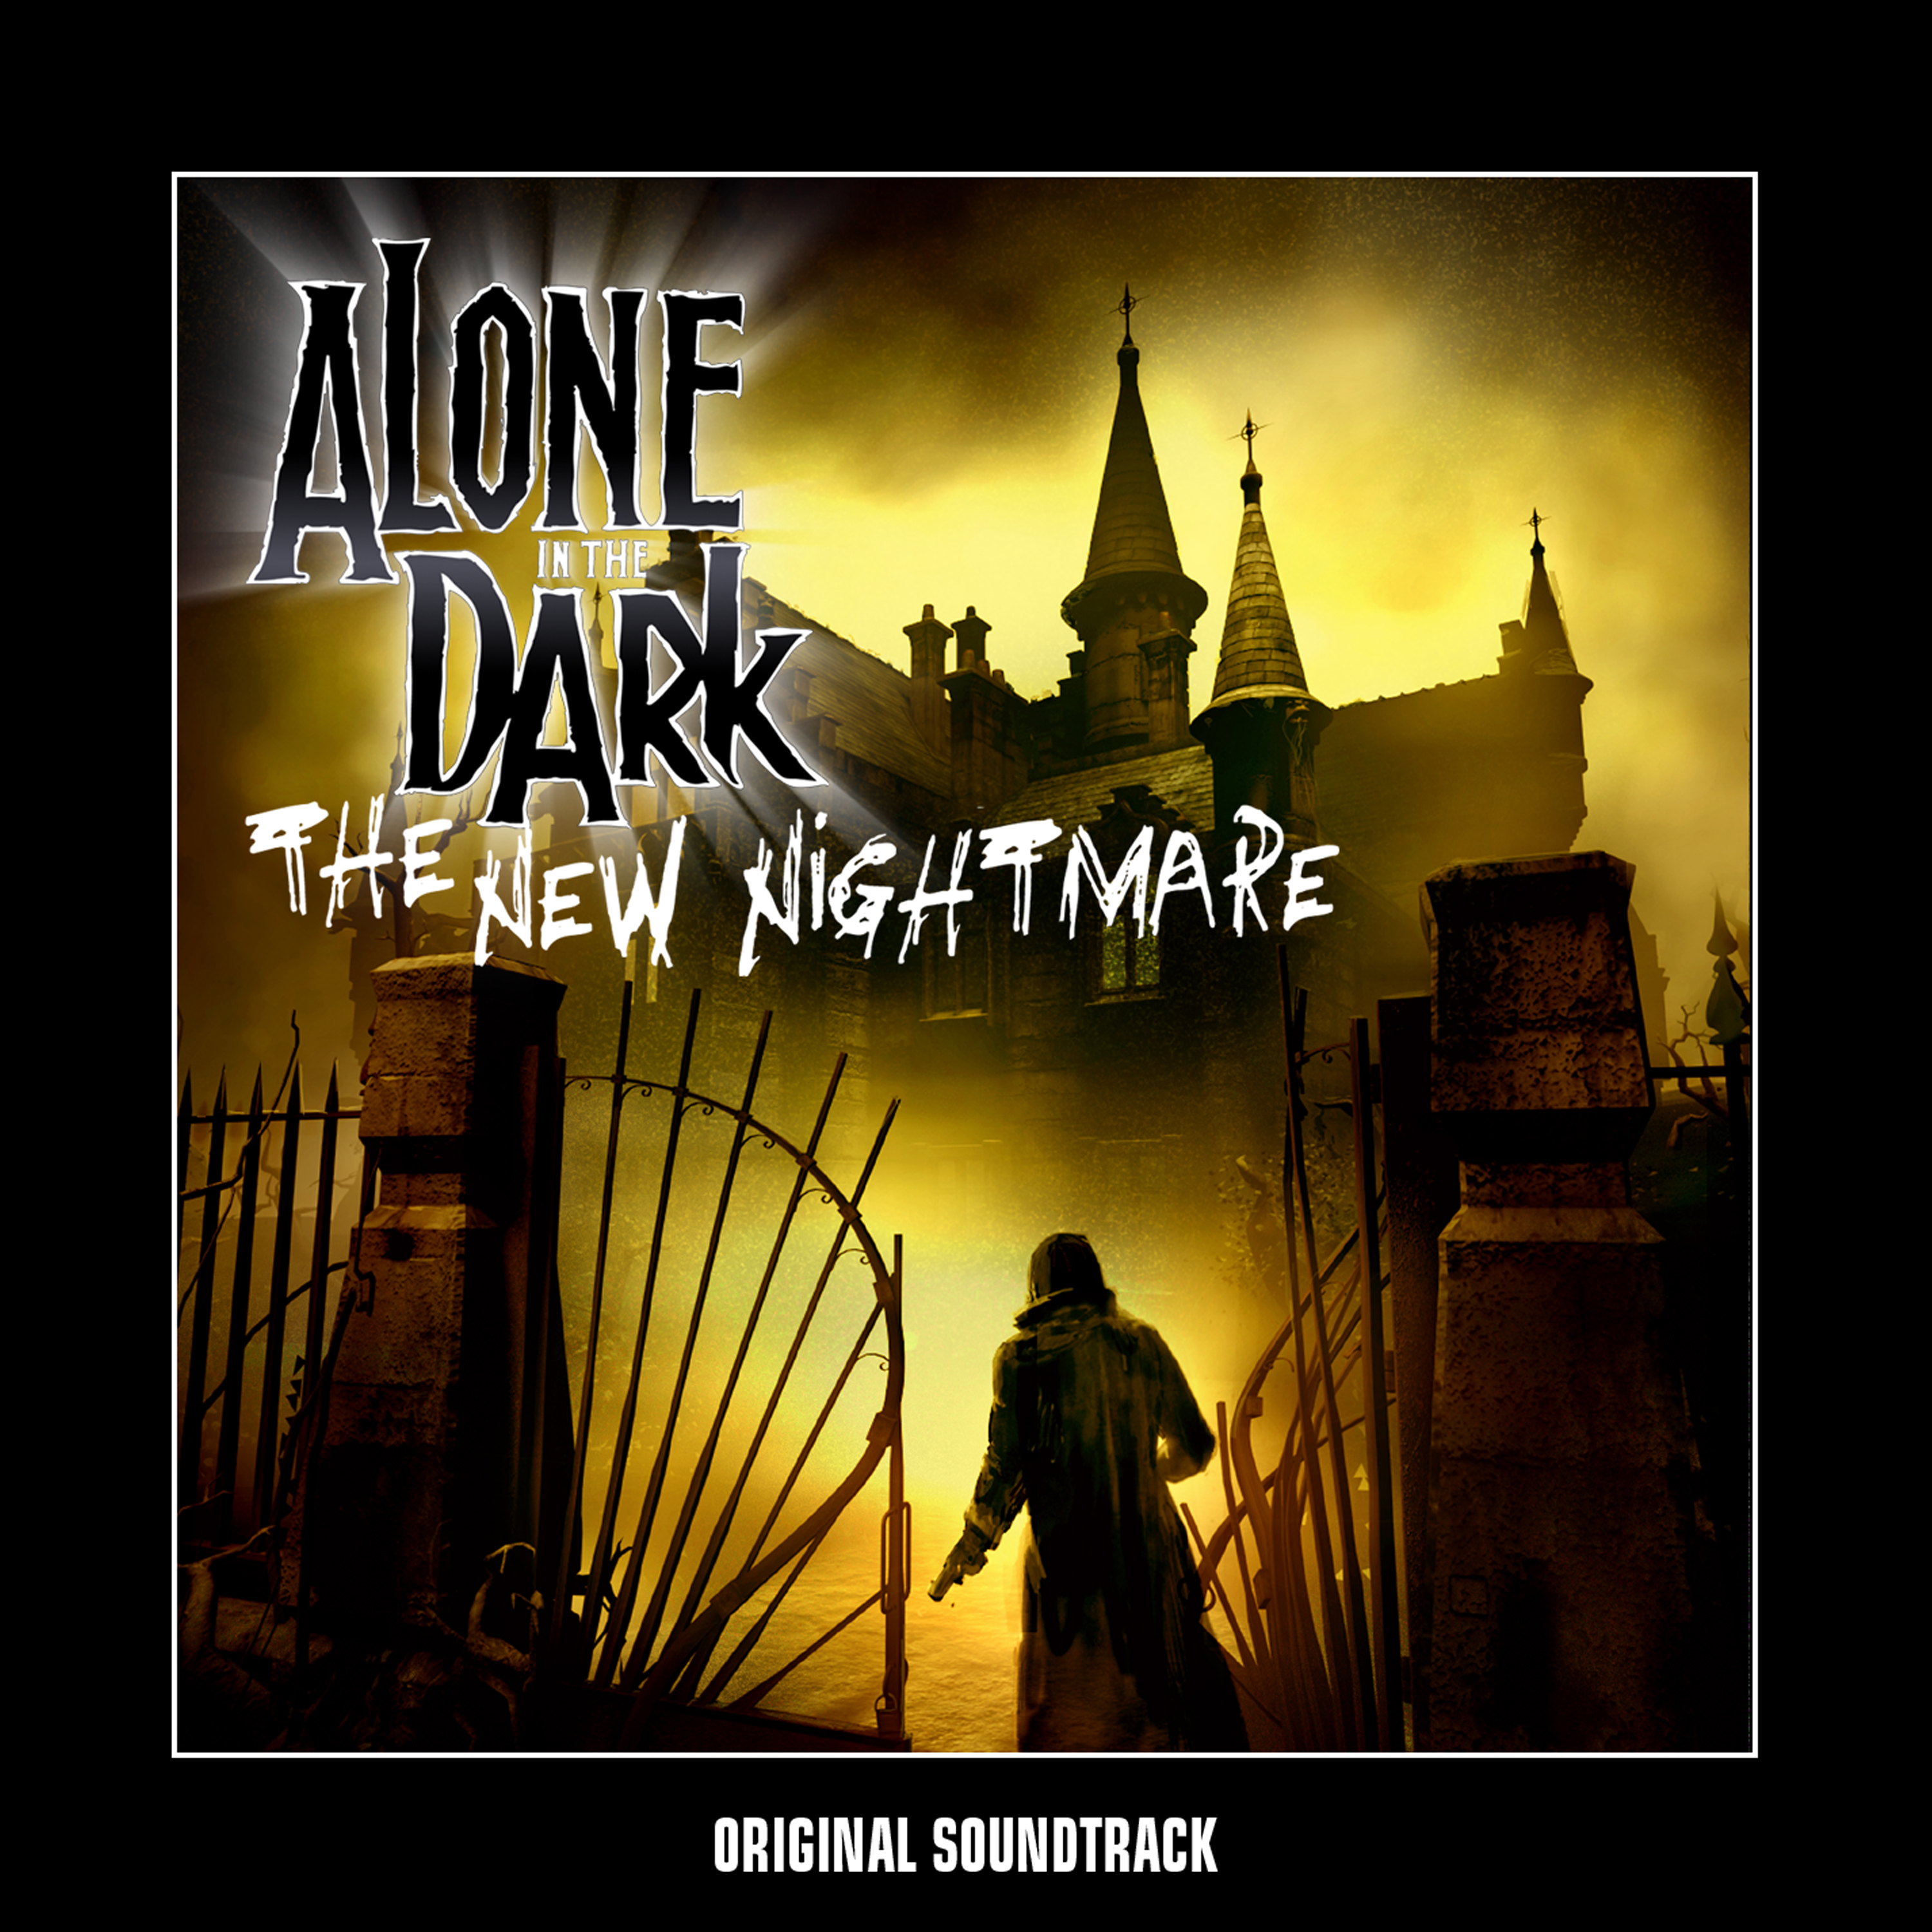 alone in the dark soundtrack